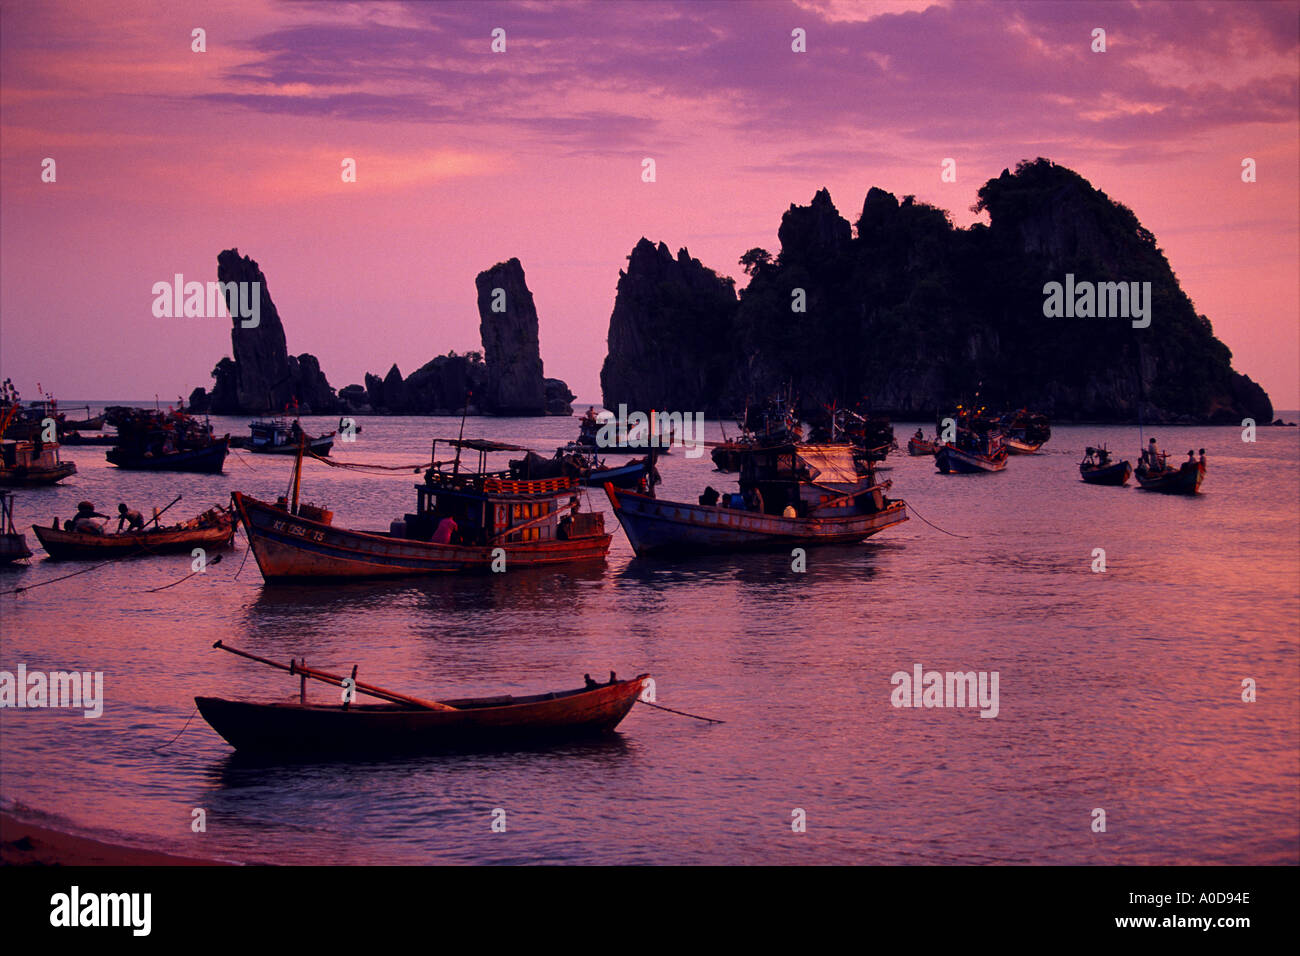 Vietnam, Hon Phu Tu Felsformationen, Quong Strand Angeln Boote, Sonnenuntergang Stockfoto